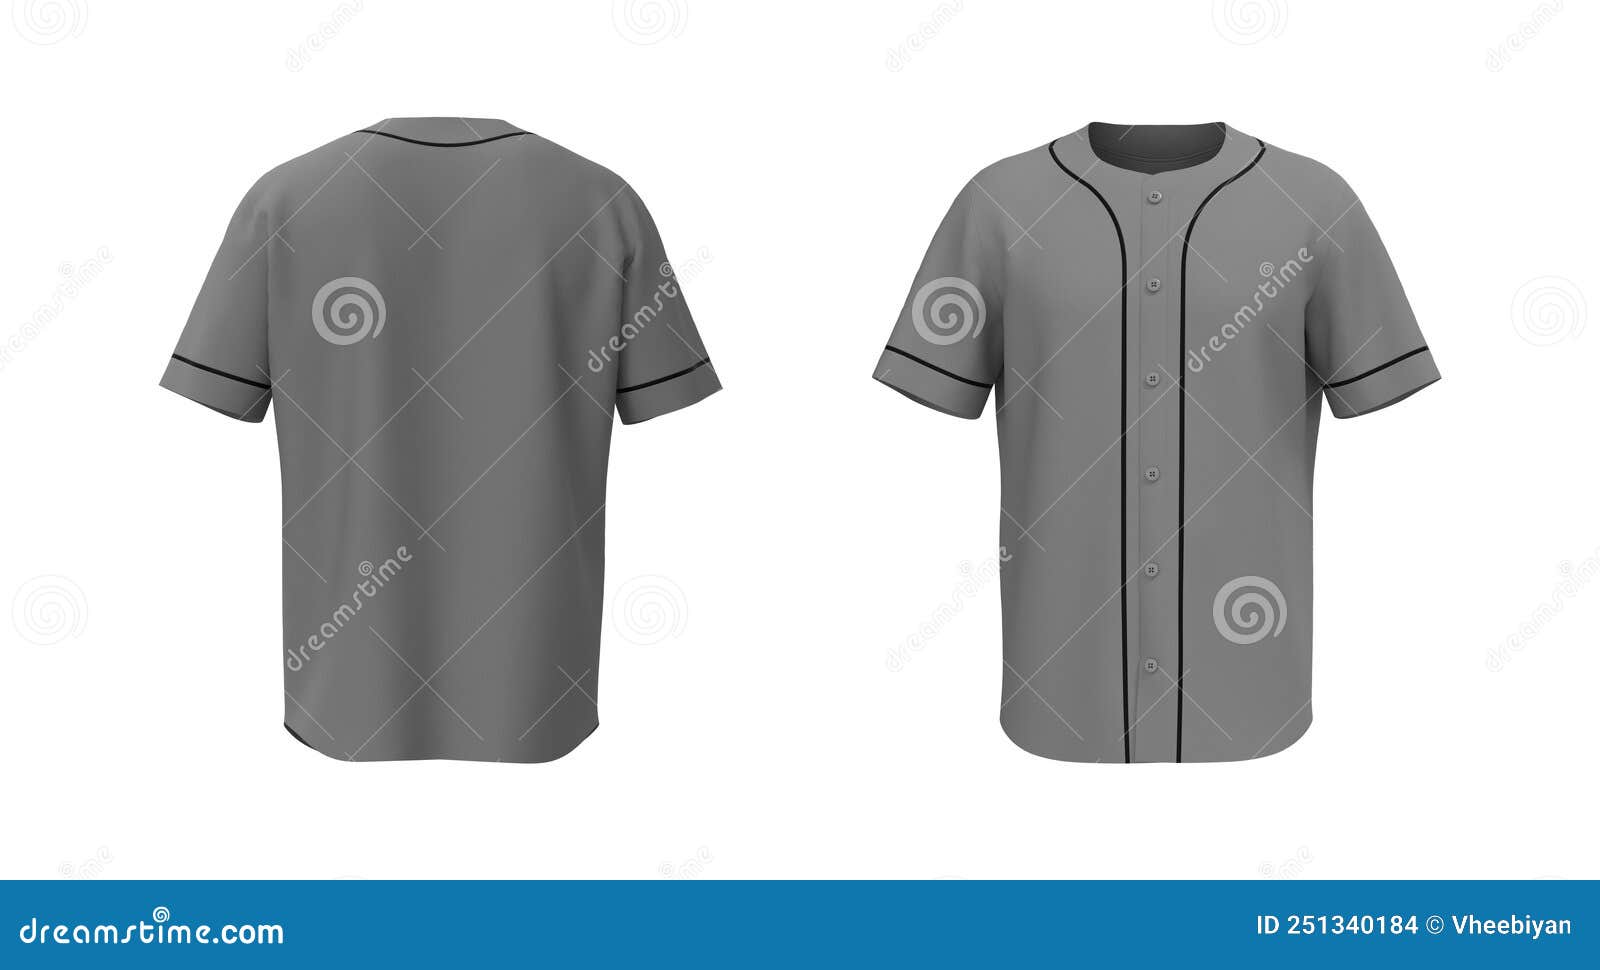 Baseball T-Shirt Mockup in Front and Back Views, 3d Illustration, 3d ...